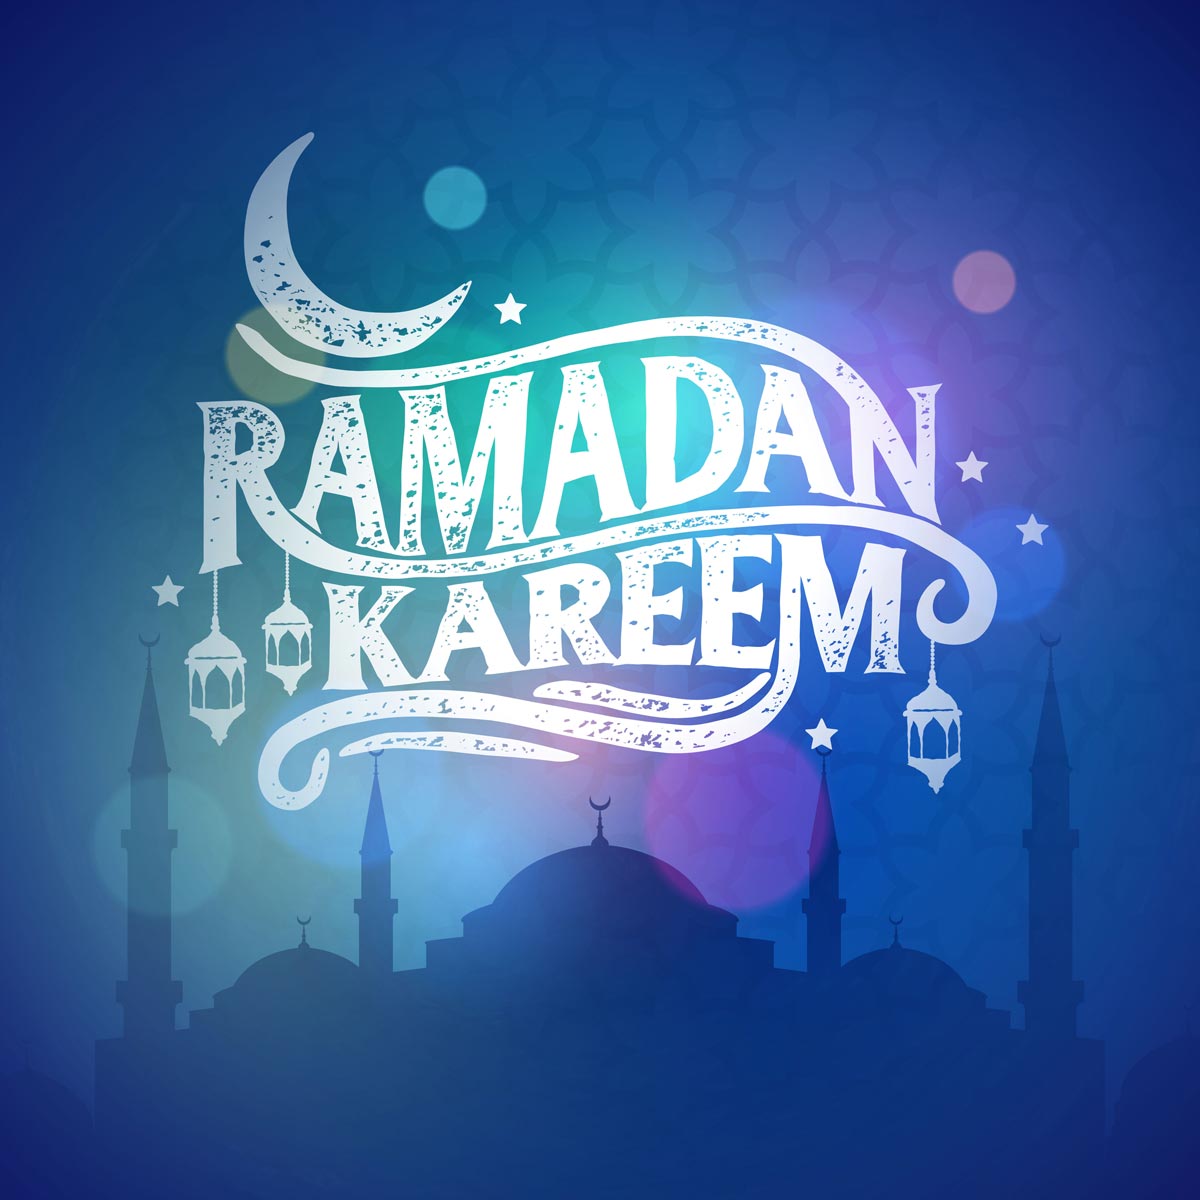 Can We Say Ramadan Kareem?